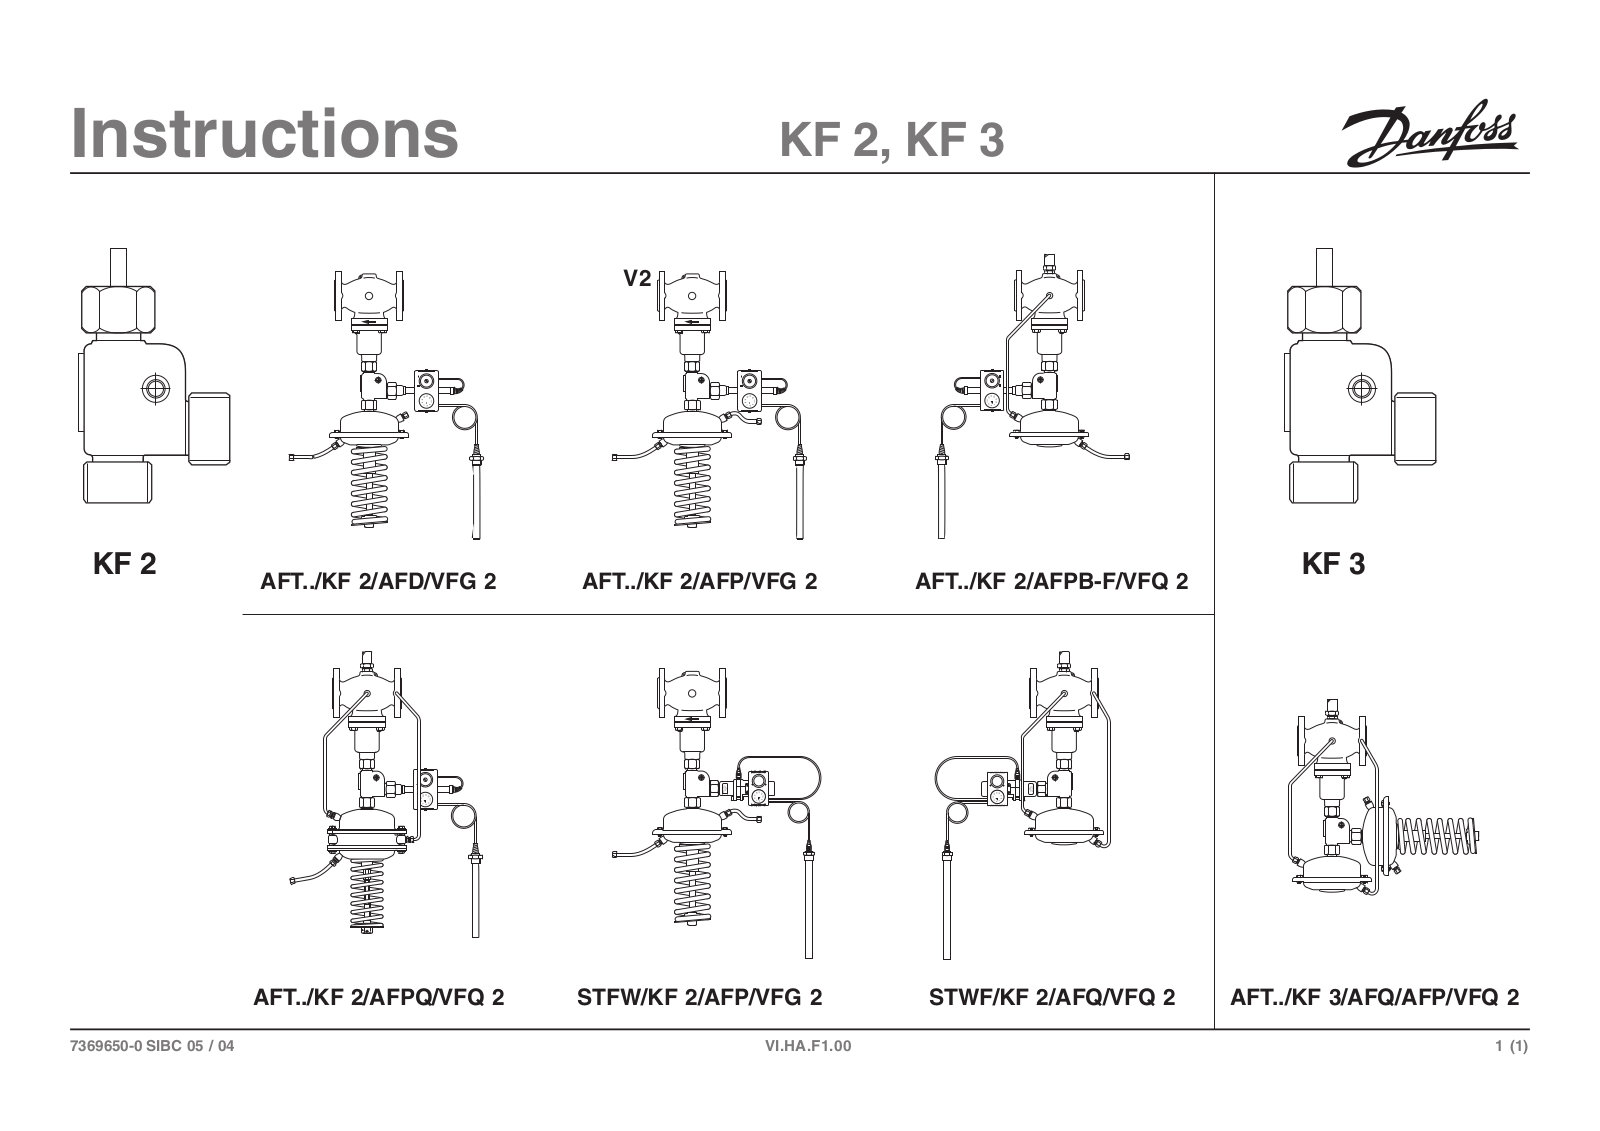 Danfoss KF 2, KF 3 Installation guide